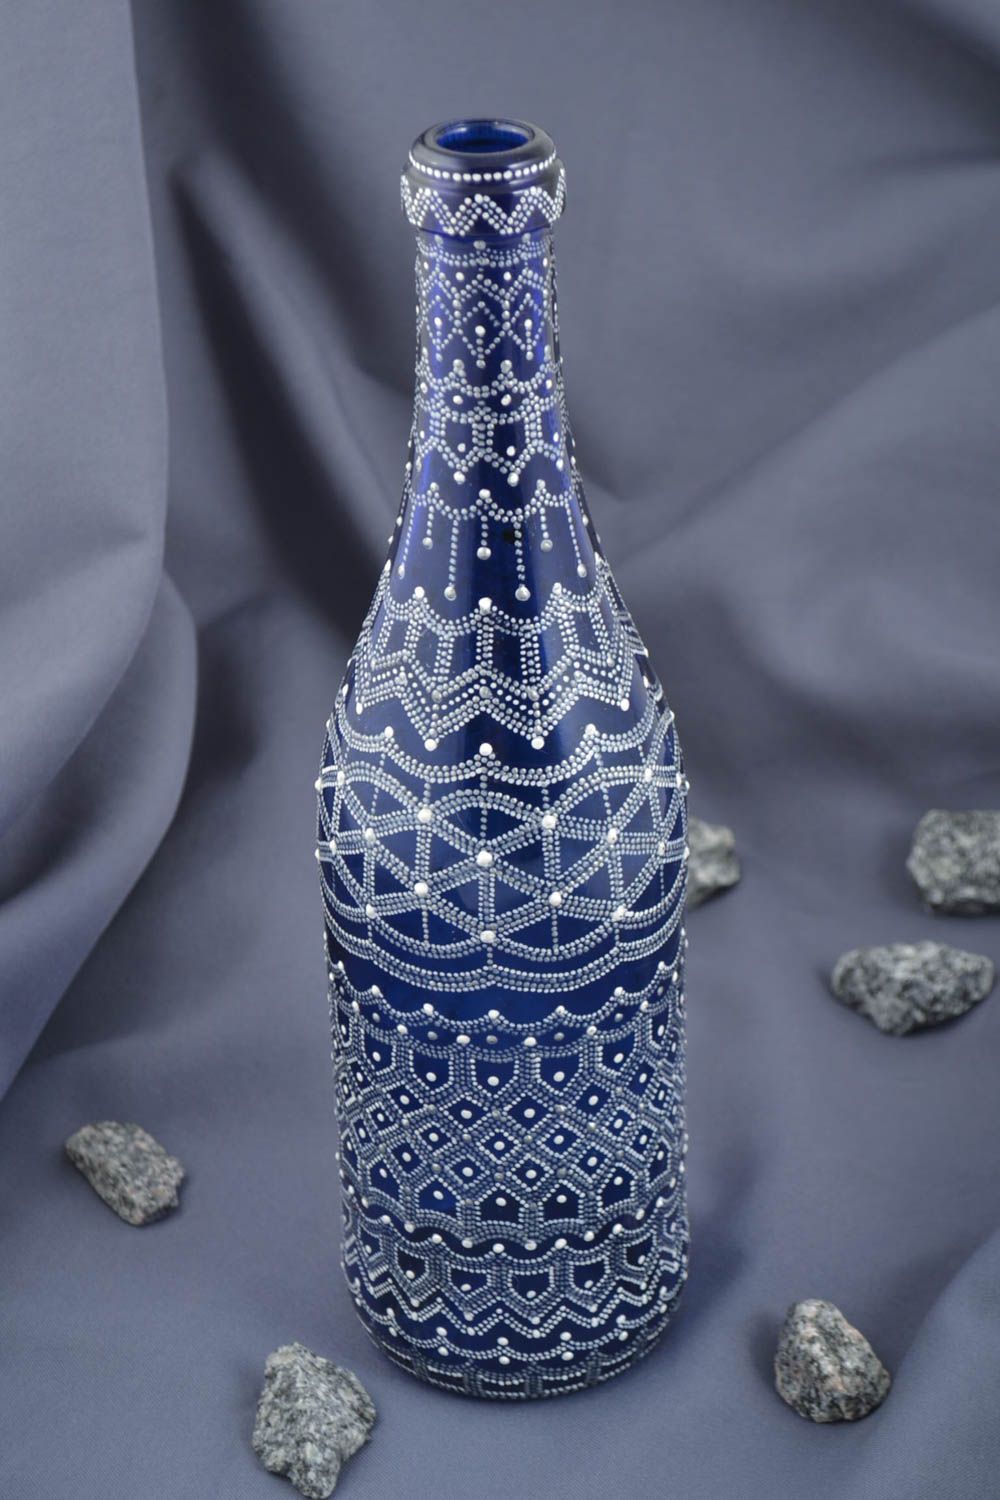 Handmade glass kitchenware painted stylish bottle unusual table decor ideas photo 1